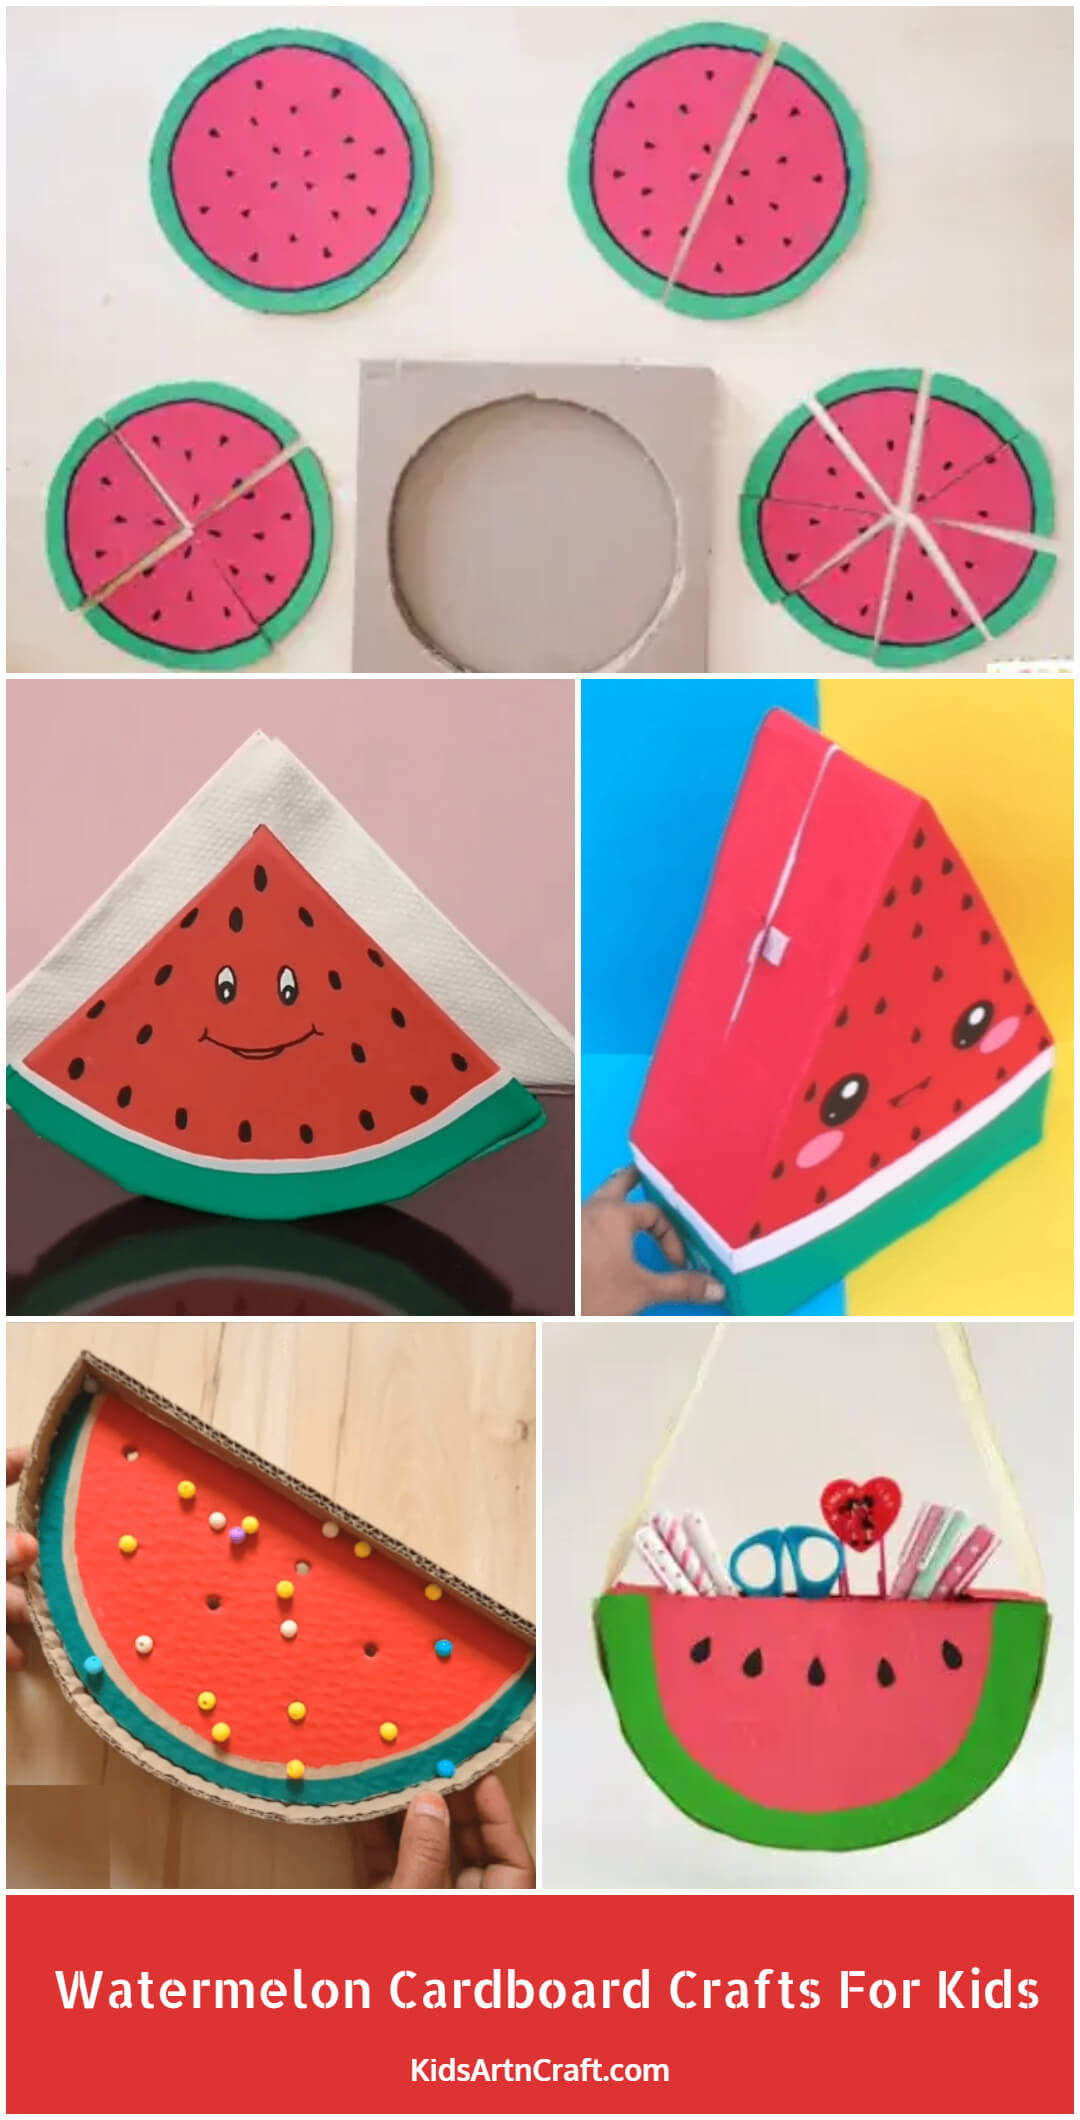 Watermelon Cardboard Crafts For Kids